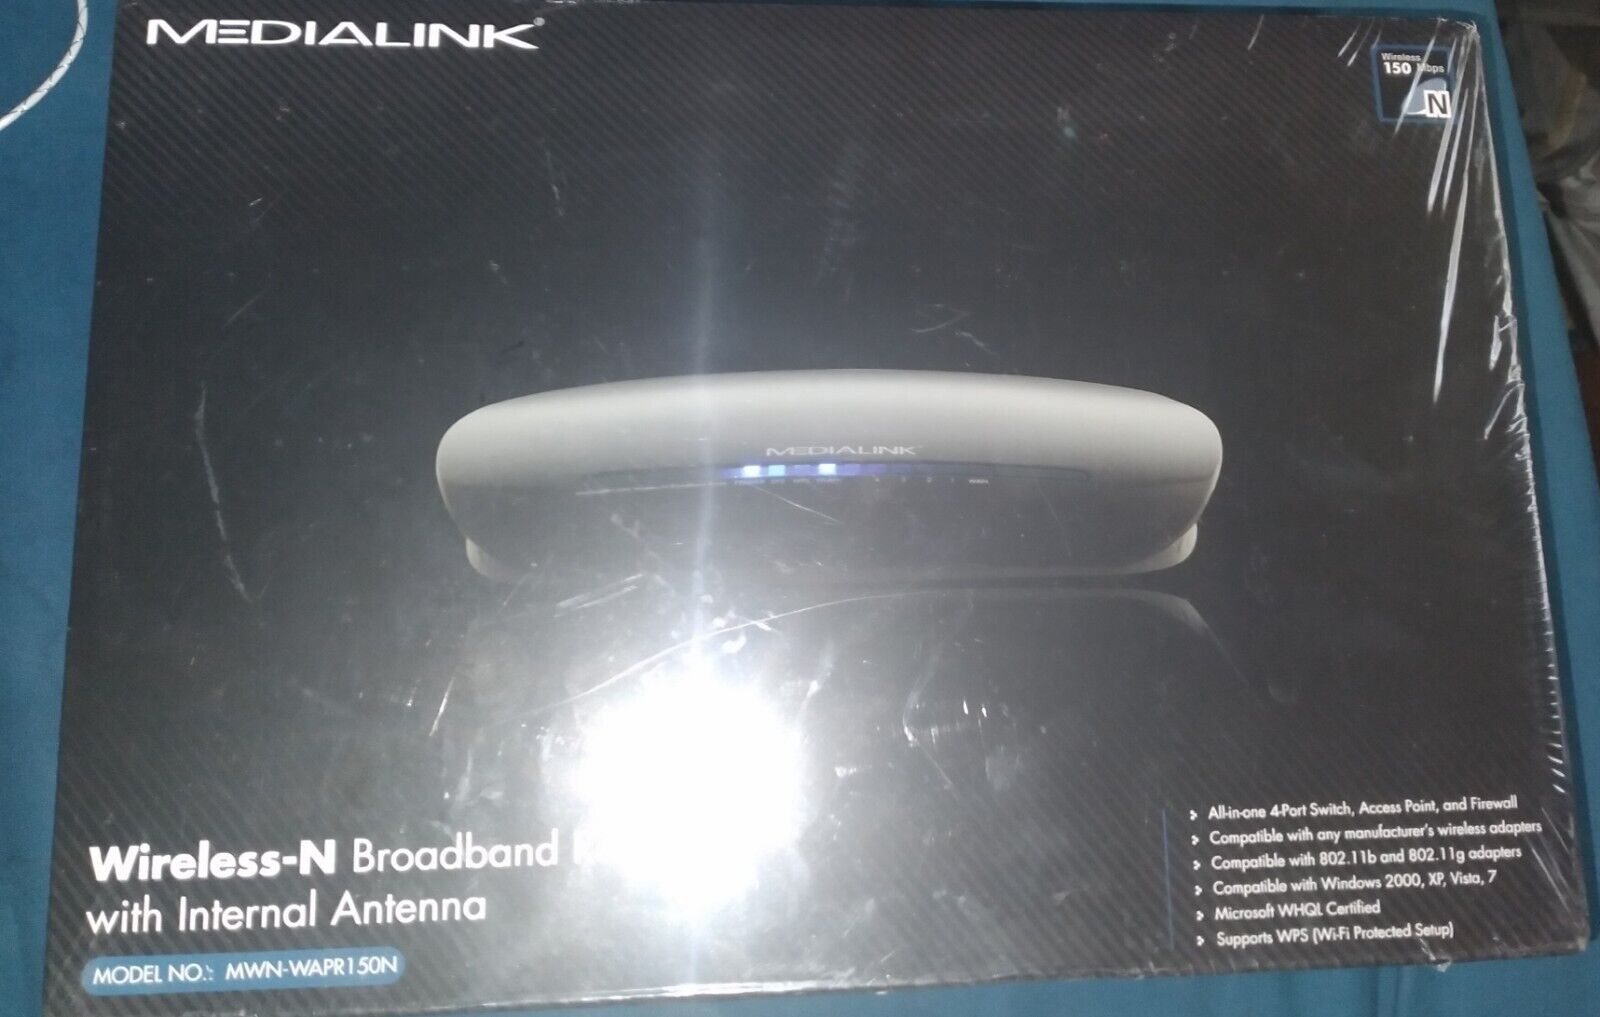 Medialink MWN-WAPR150N Wireless-N Broadband Router With Internal Antenna (NEW) 